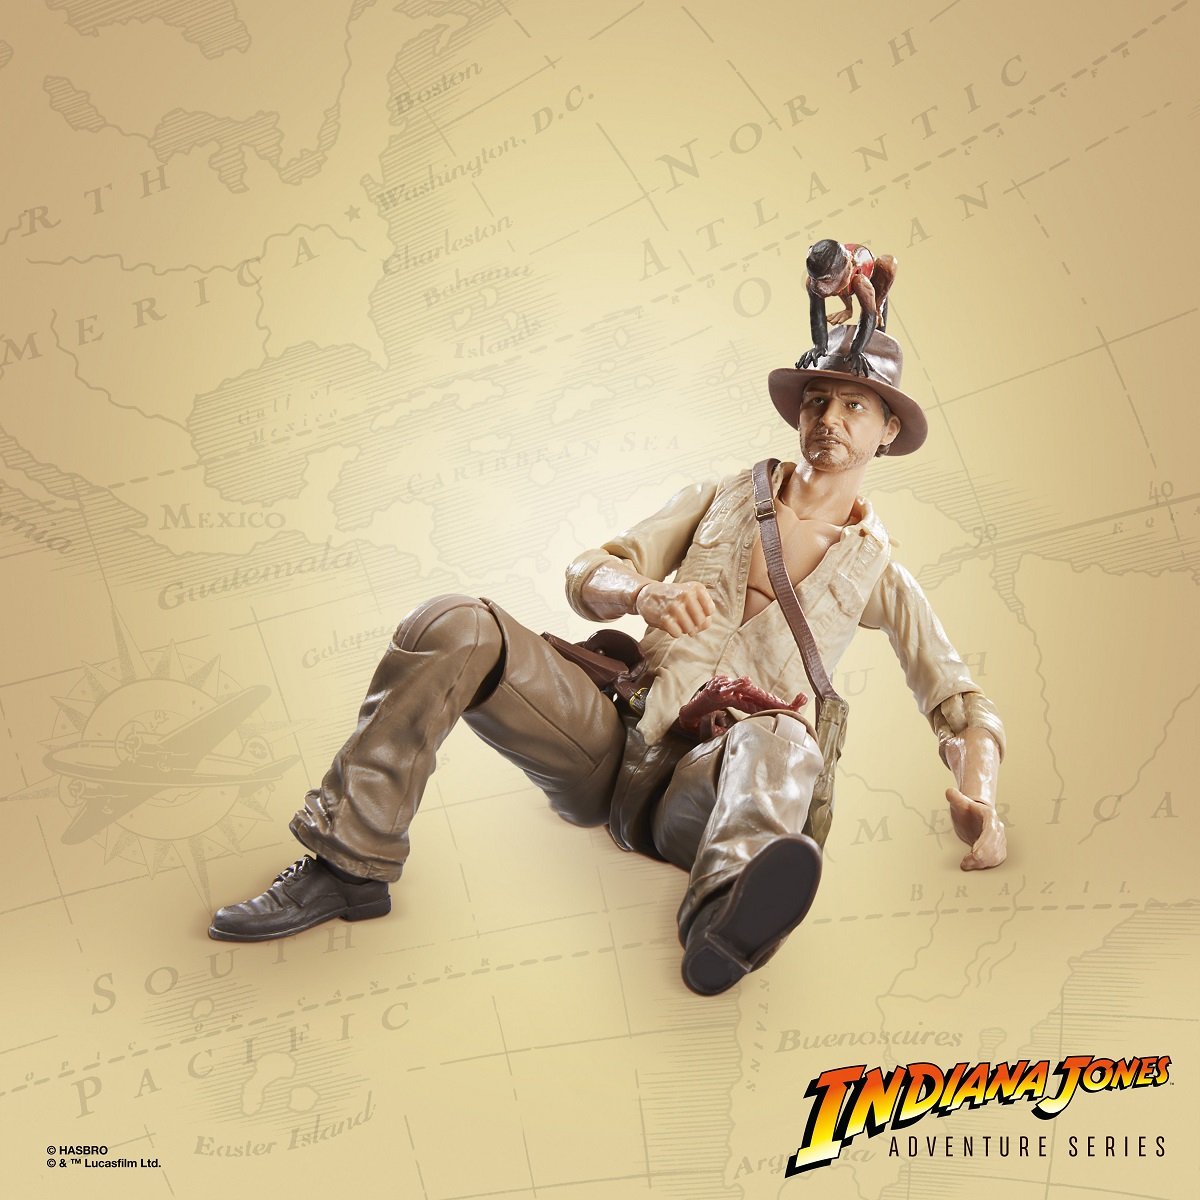 Indiana Jones Adventure new Cairo Indy Hasbro figure knocked down post fight. 